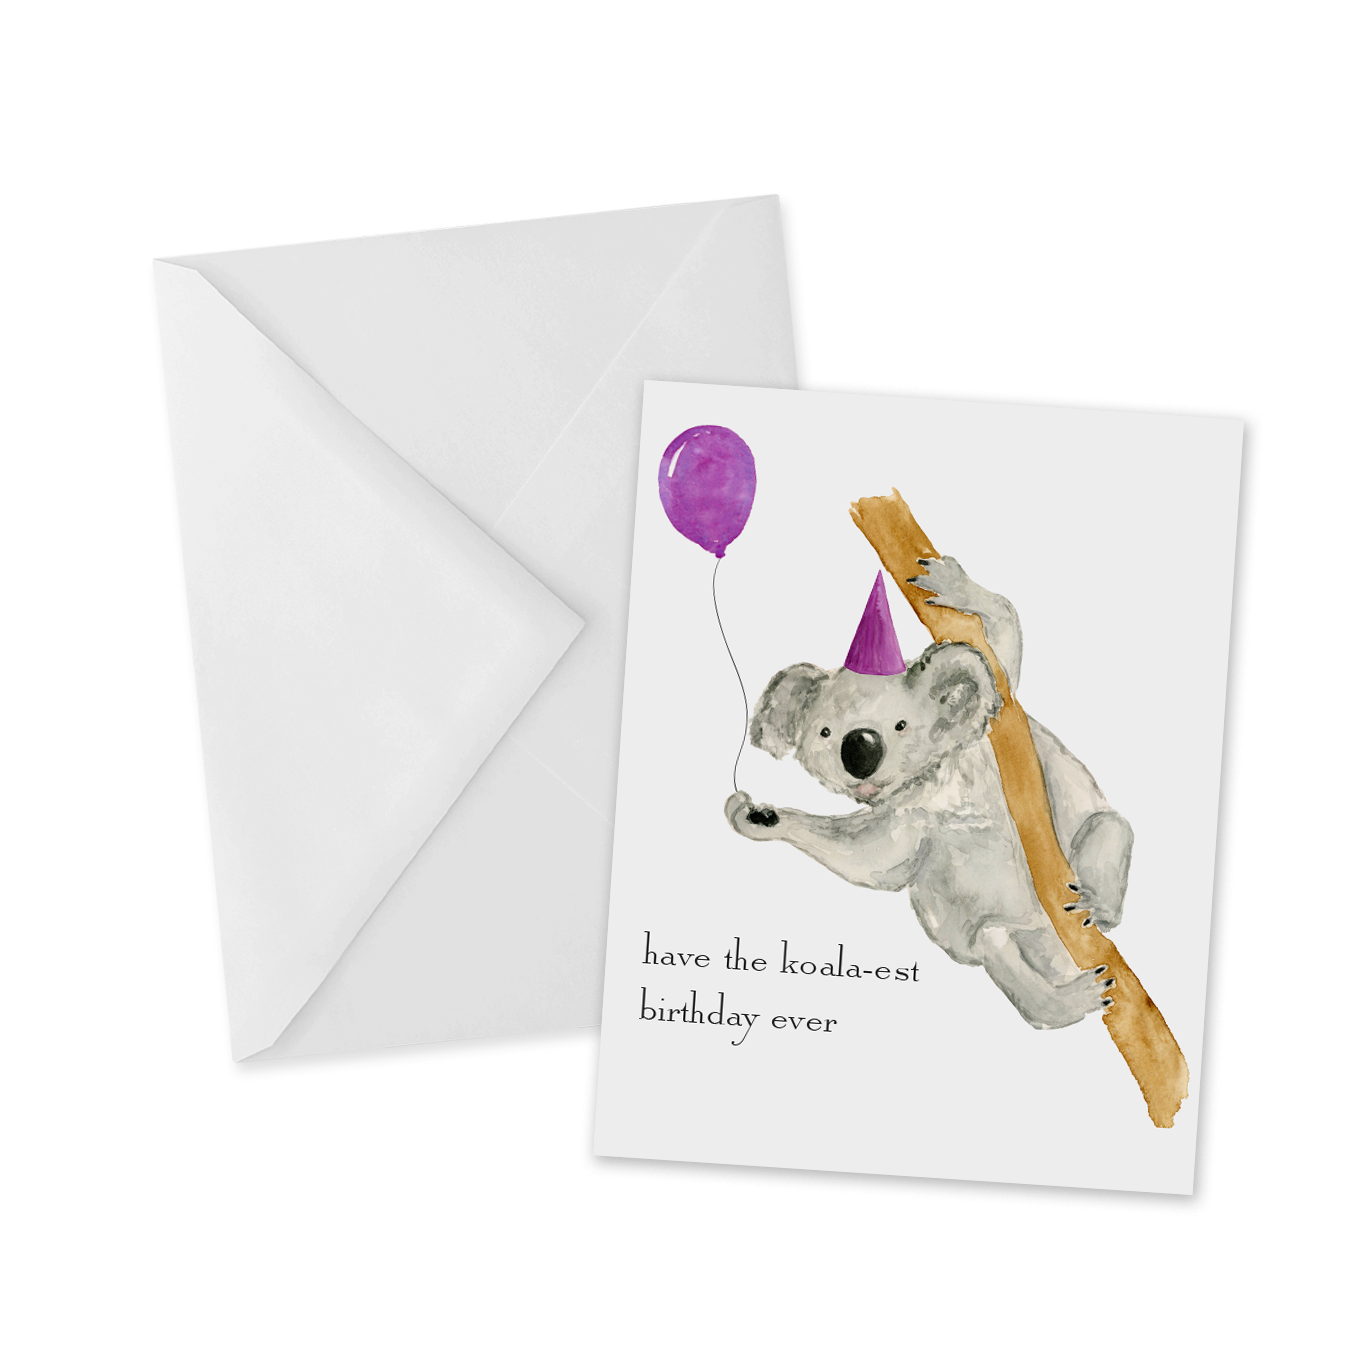 Party Animal, Wildlife Birthday Greeting Card Box